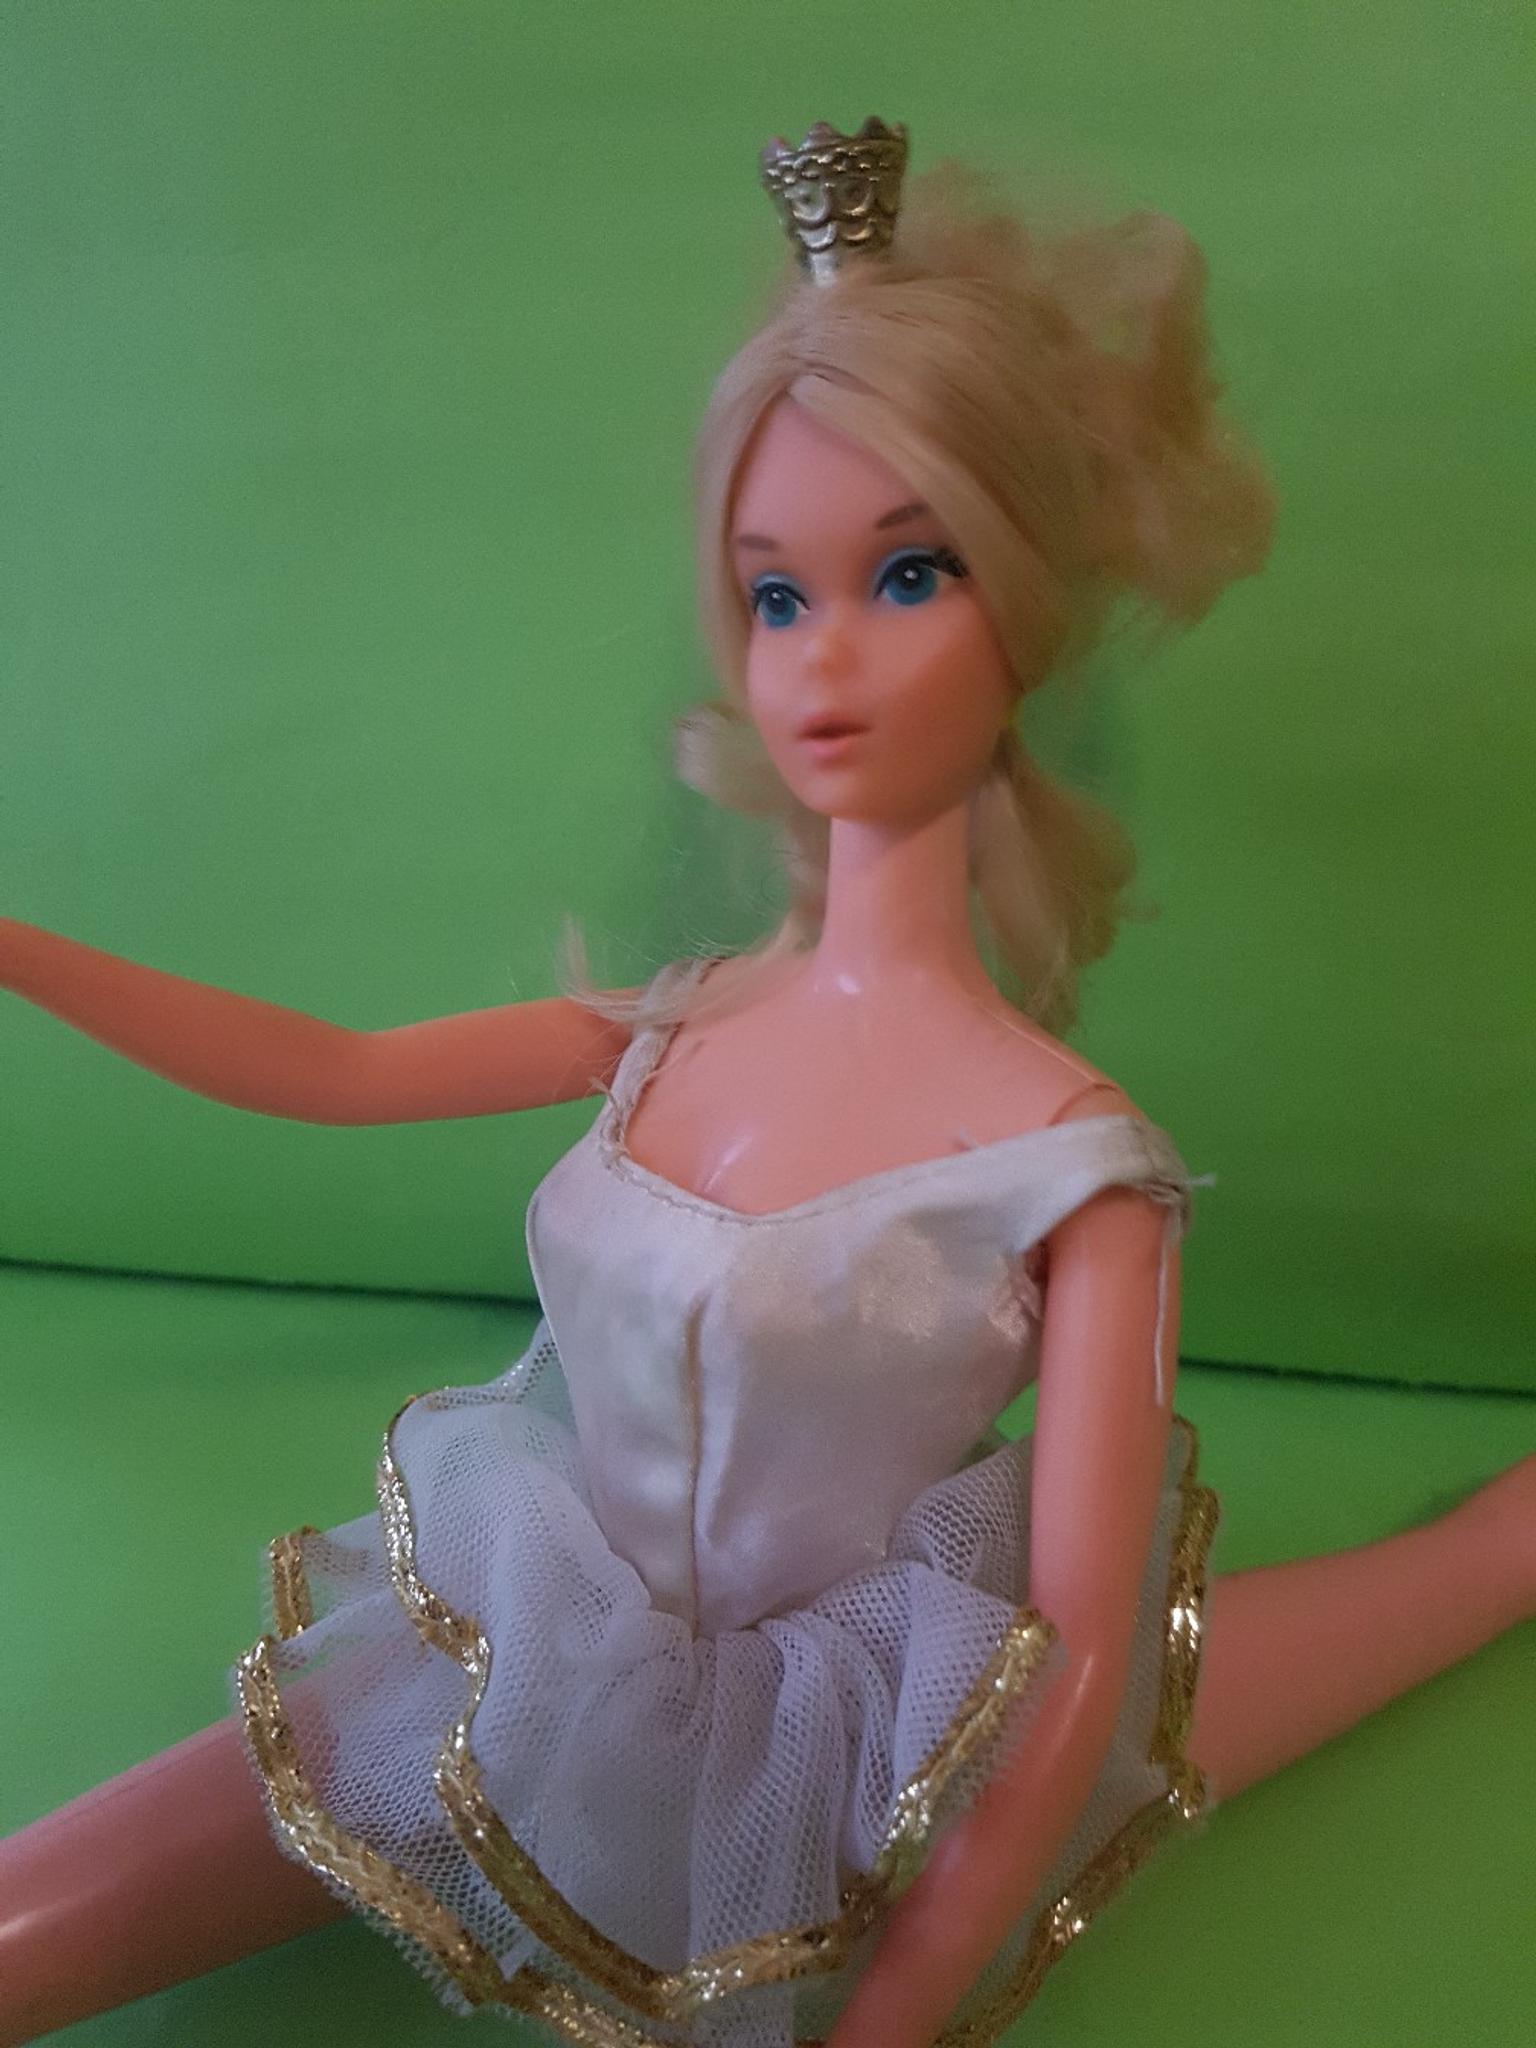 barbie ballerina snodata